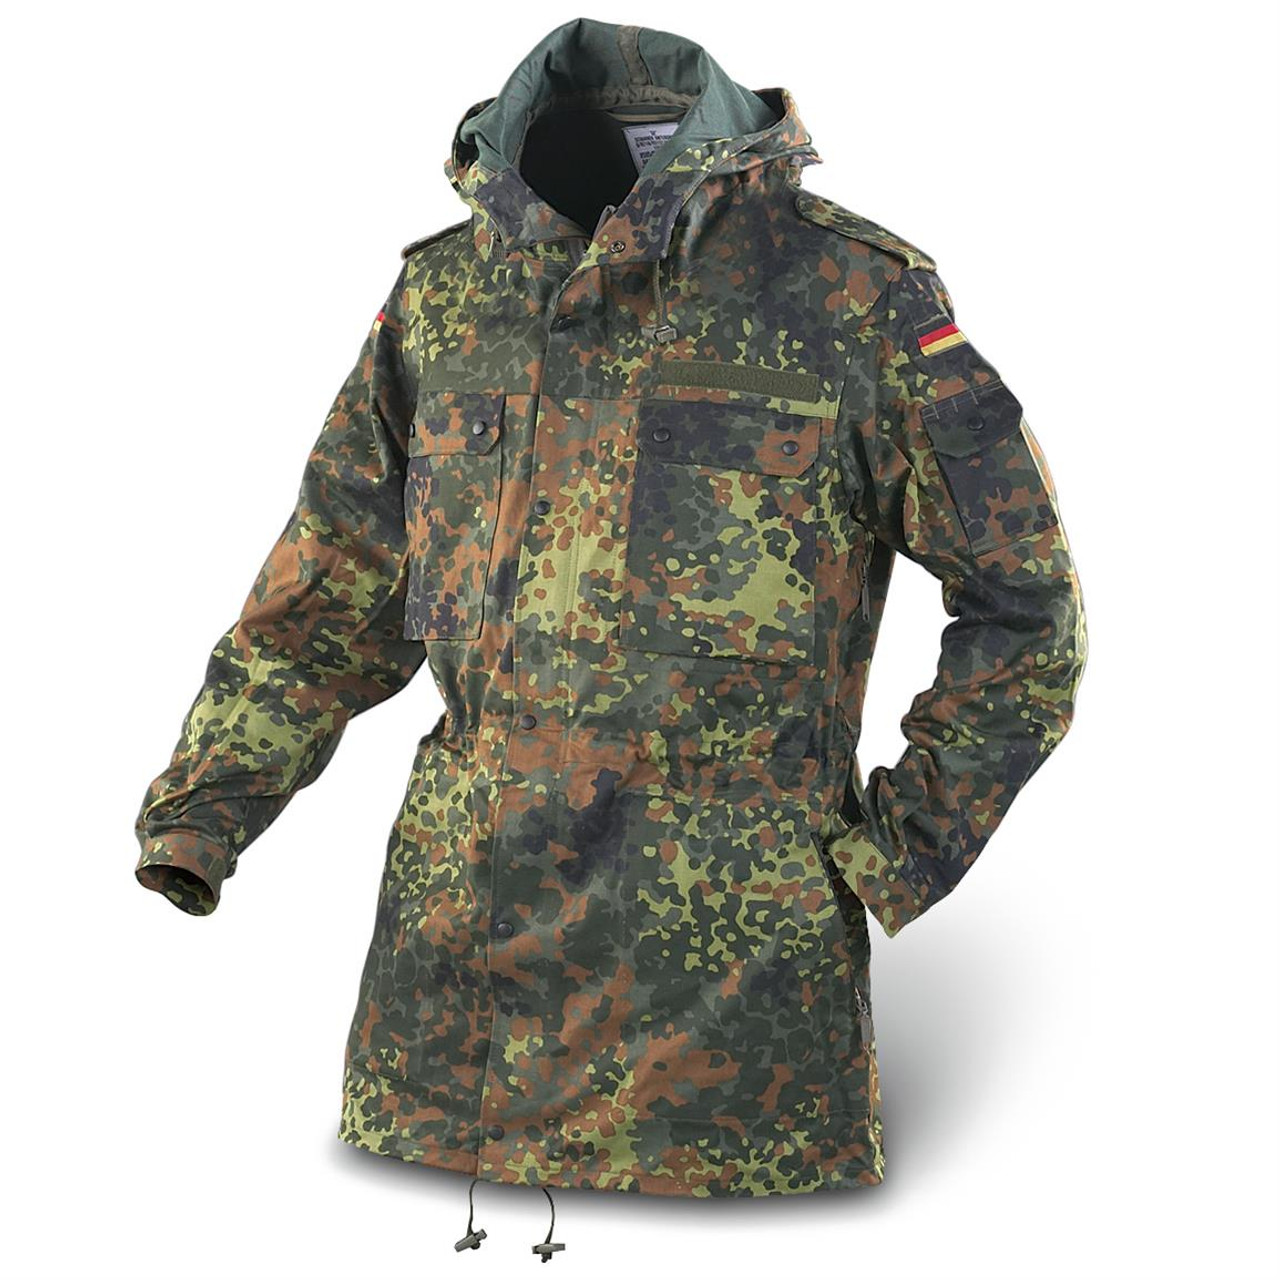 Flecktarn Camo German Army Field Jackets